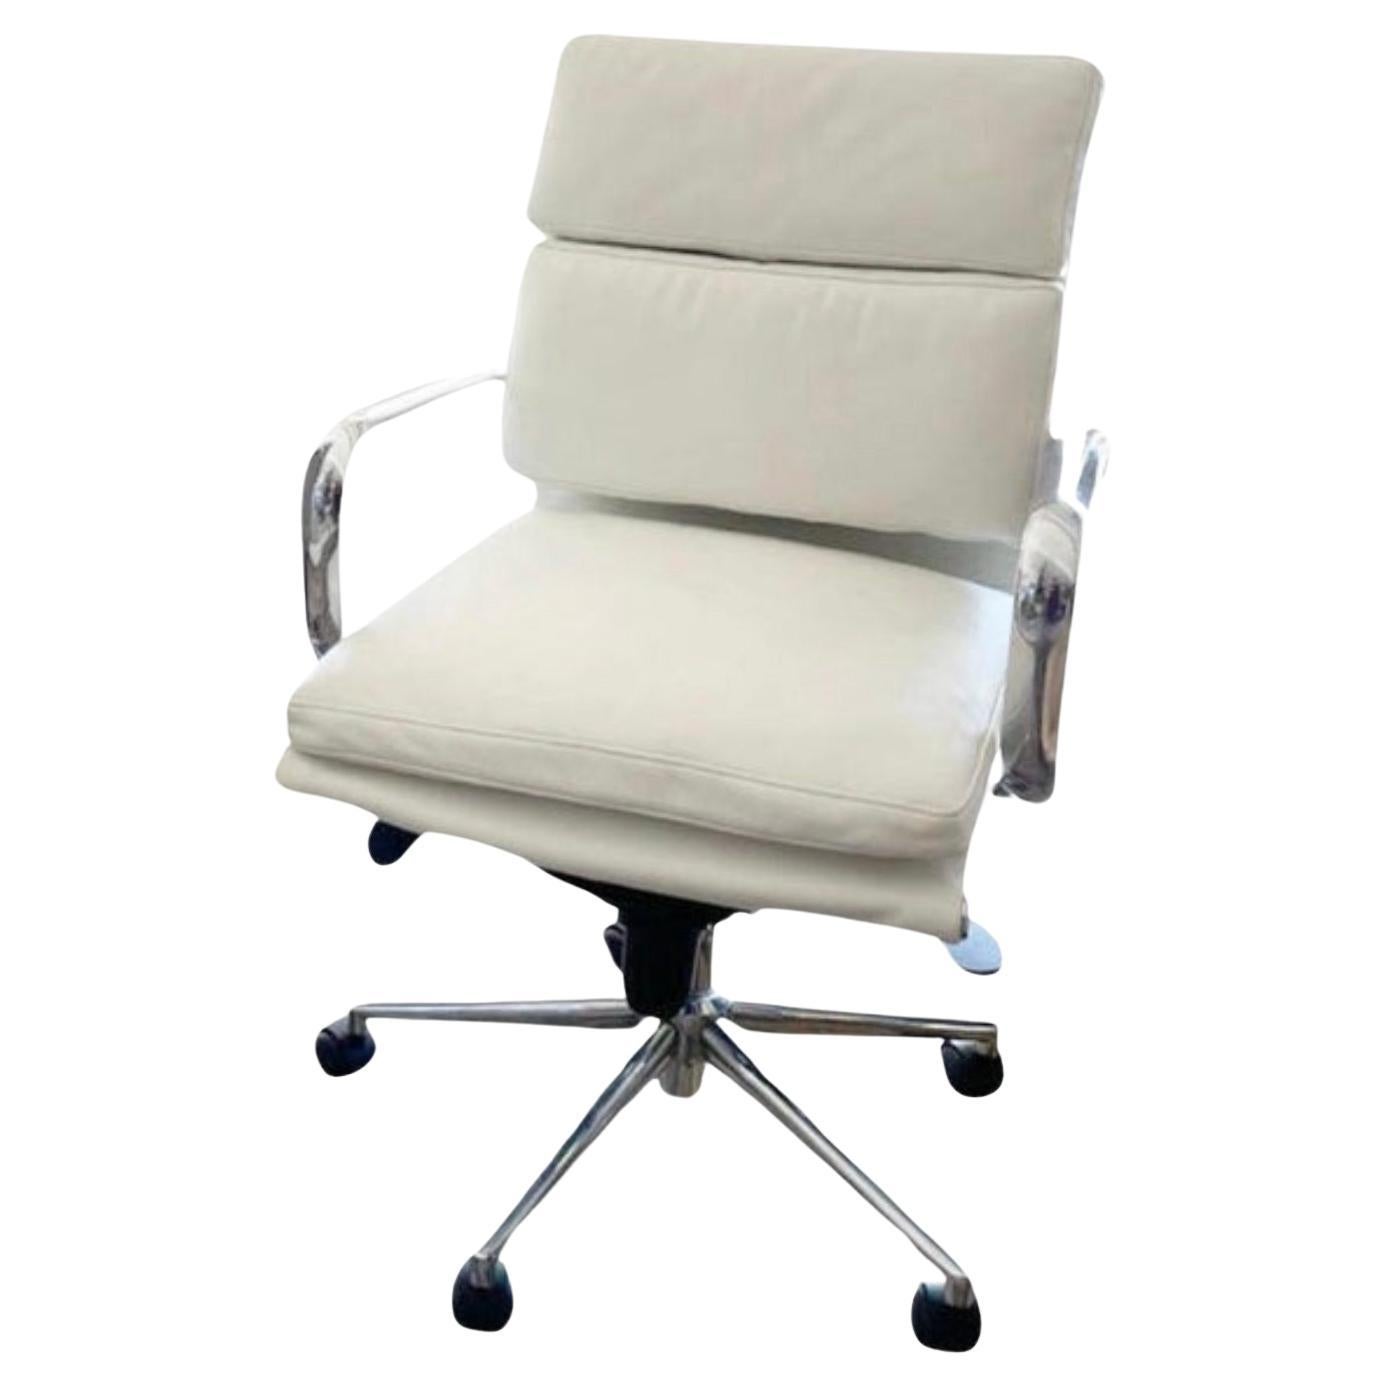 Herman Miller "Soft Pad" Chair